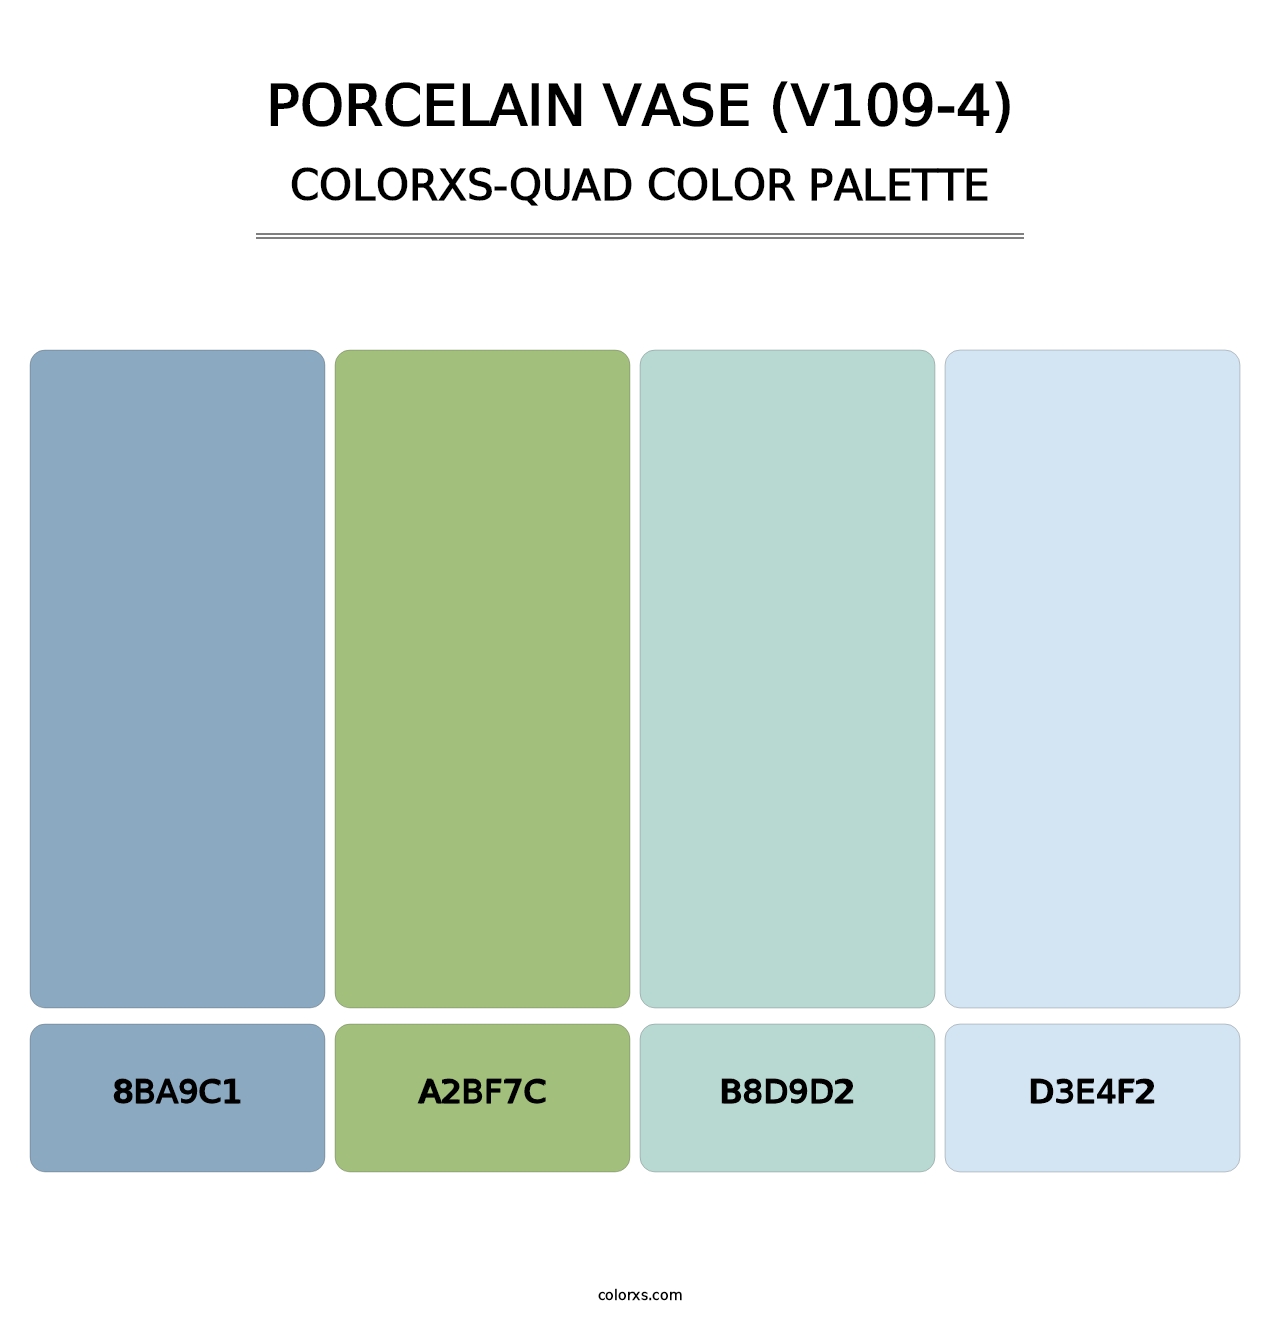 Porcelain Vase (V109-4) - Colorxs Quad Palette